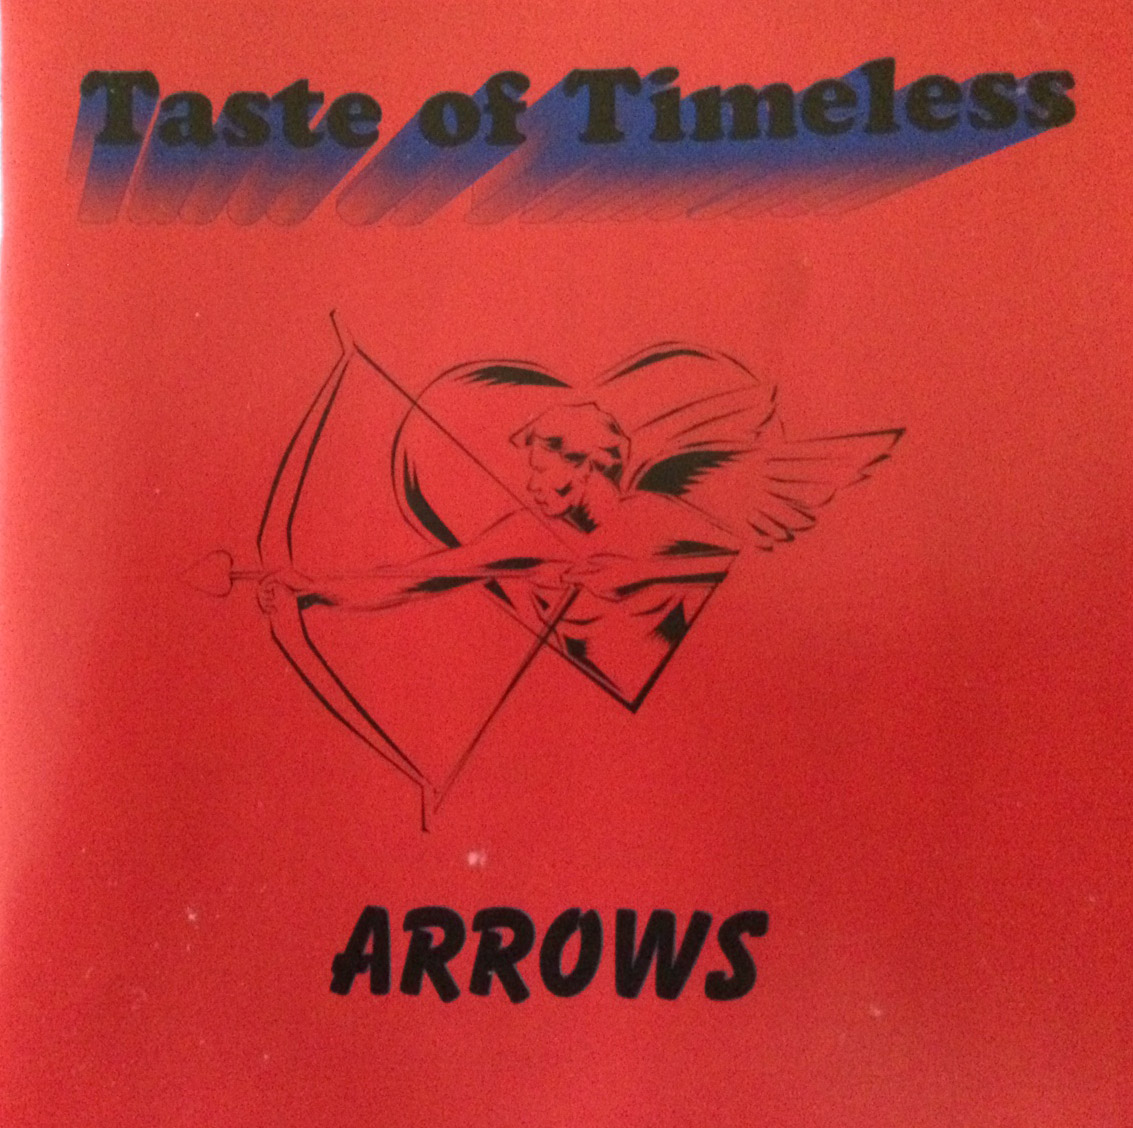 Taste of Timeless, Arrows - CD - original